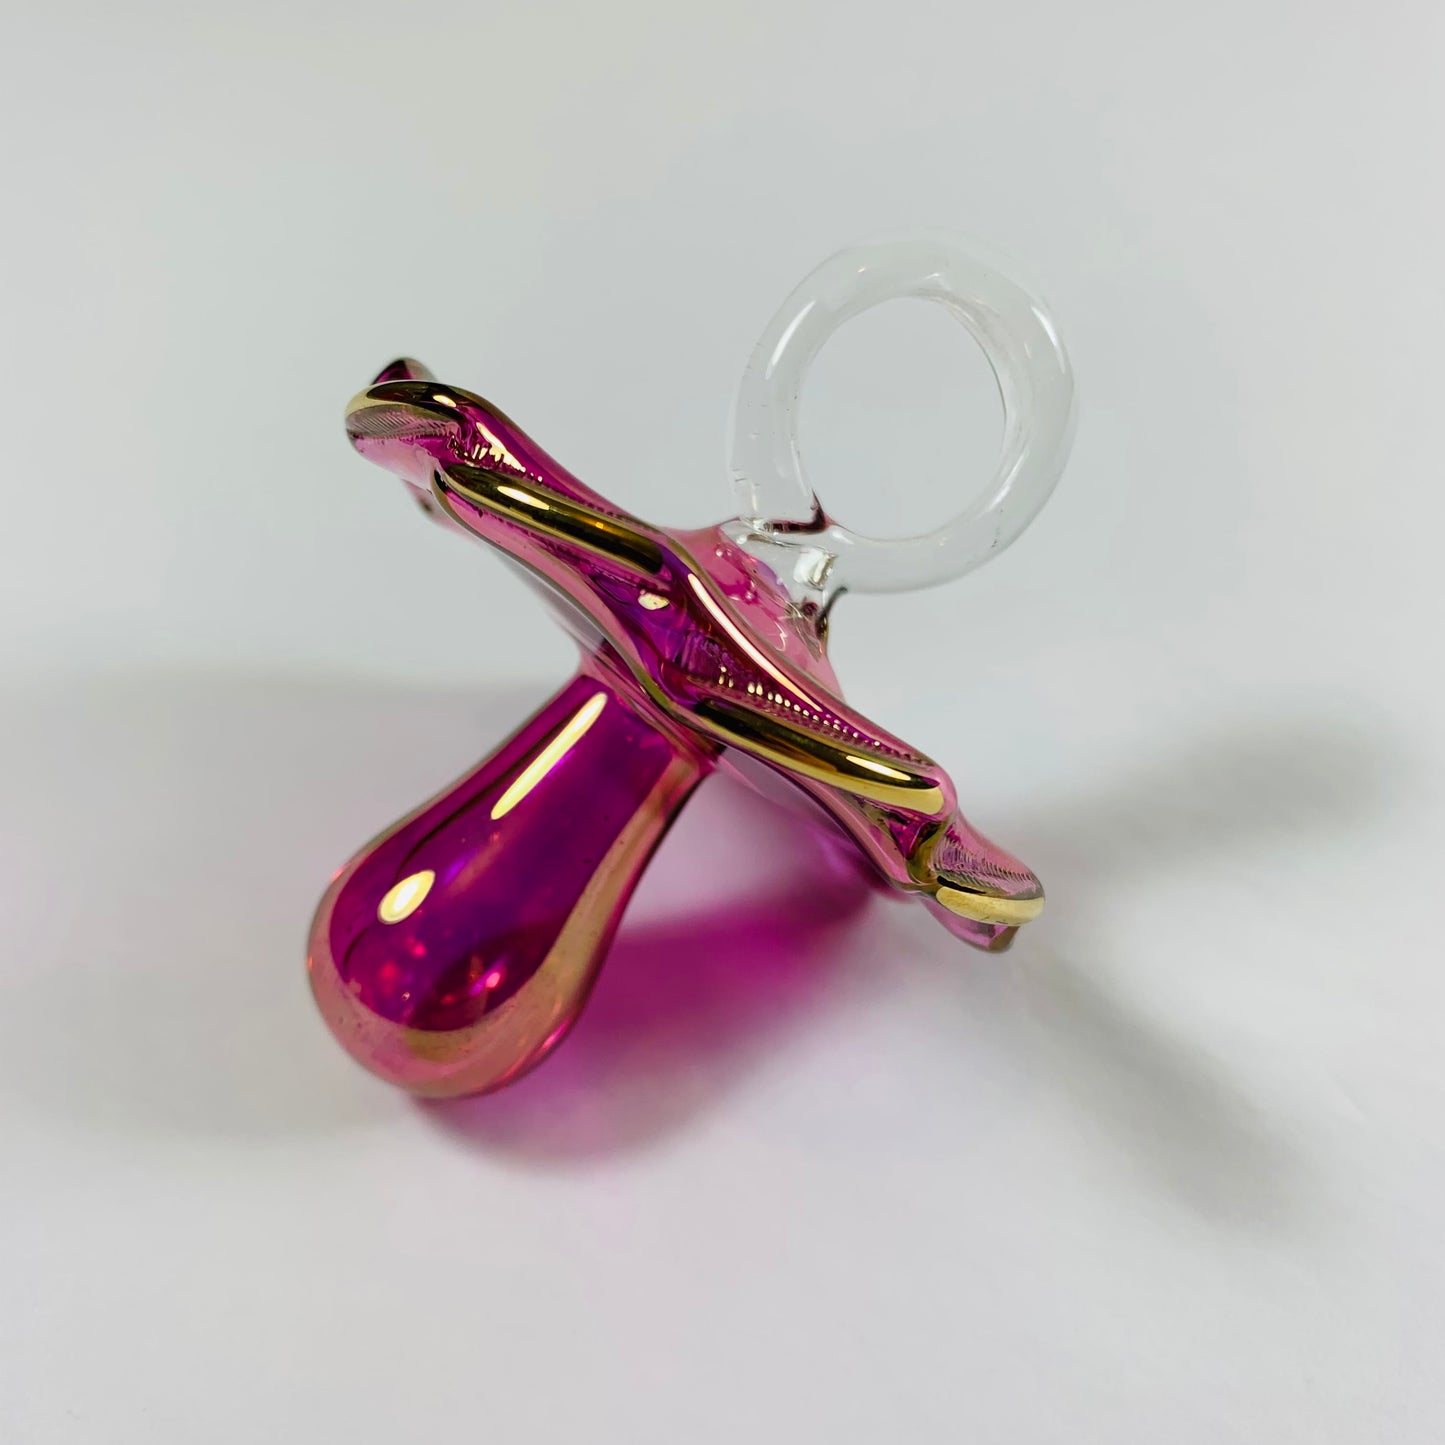 Blown Glass Ornament - Pacifier: Pink